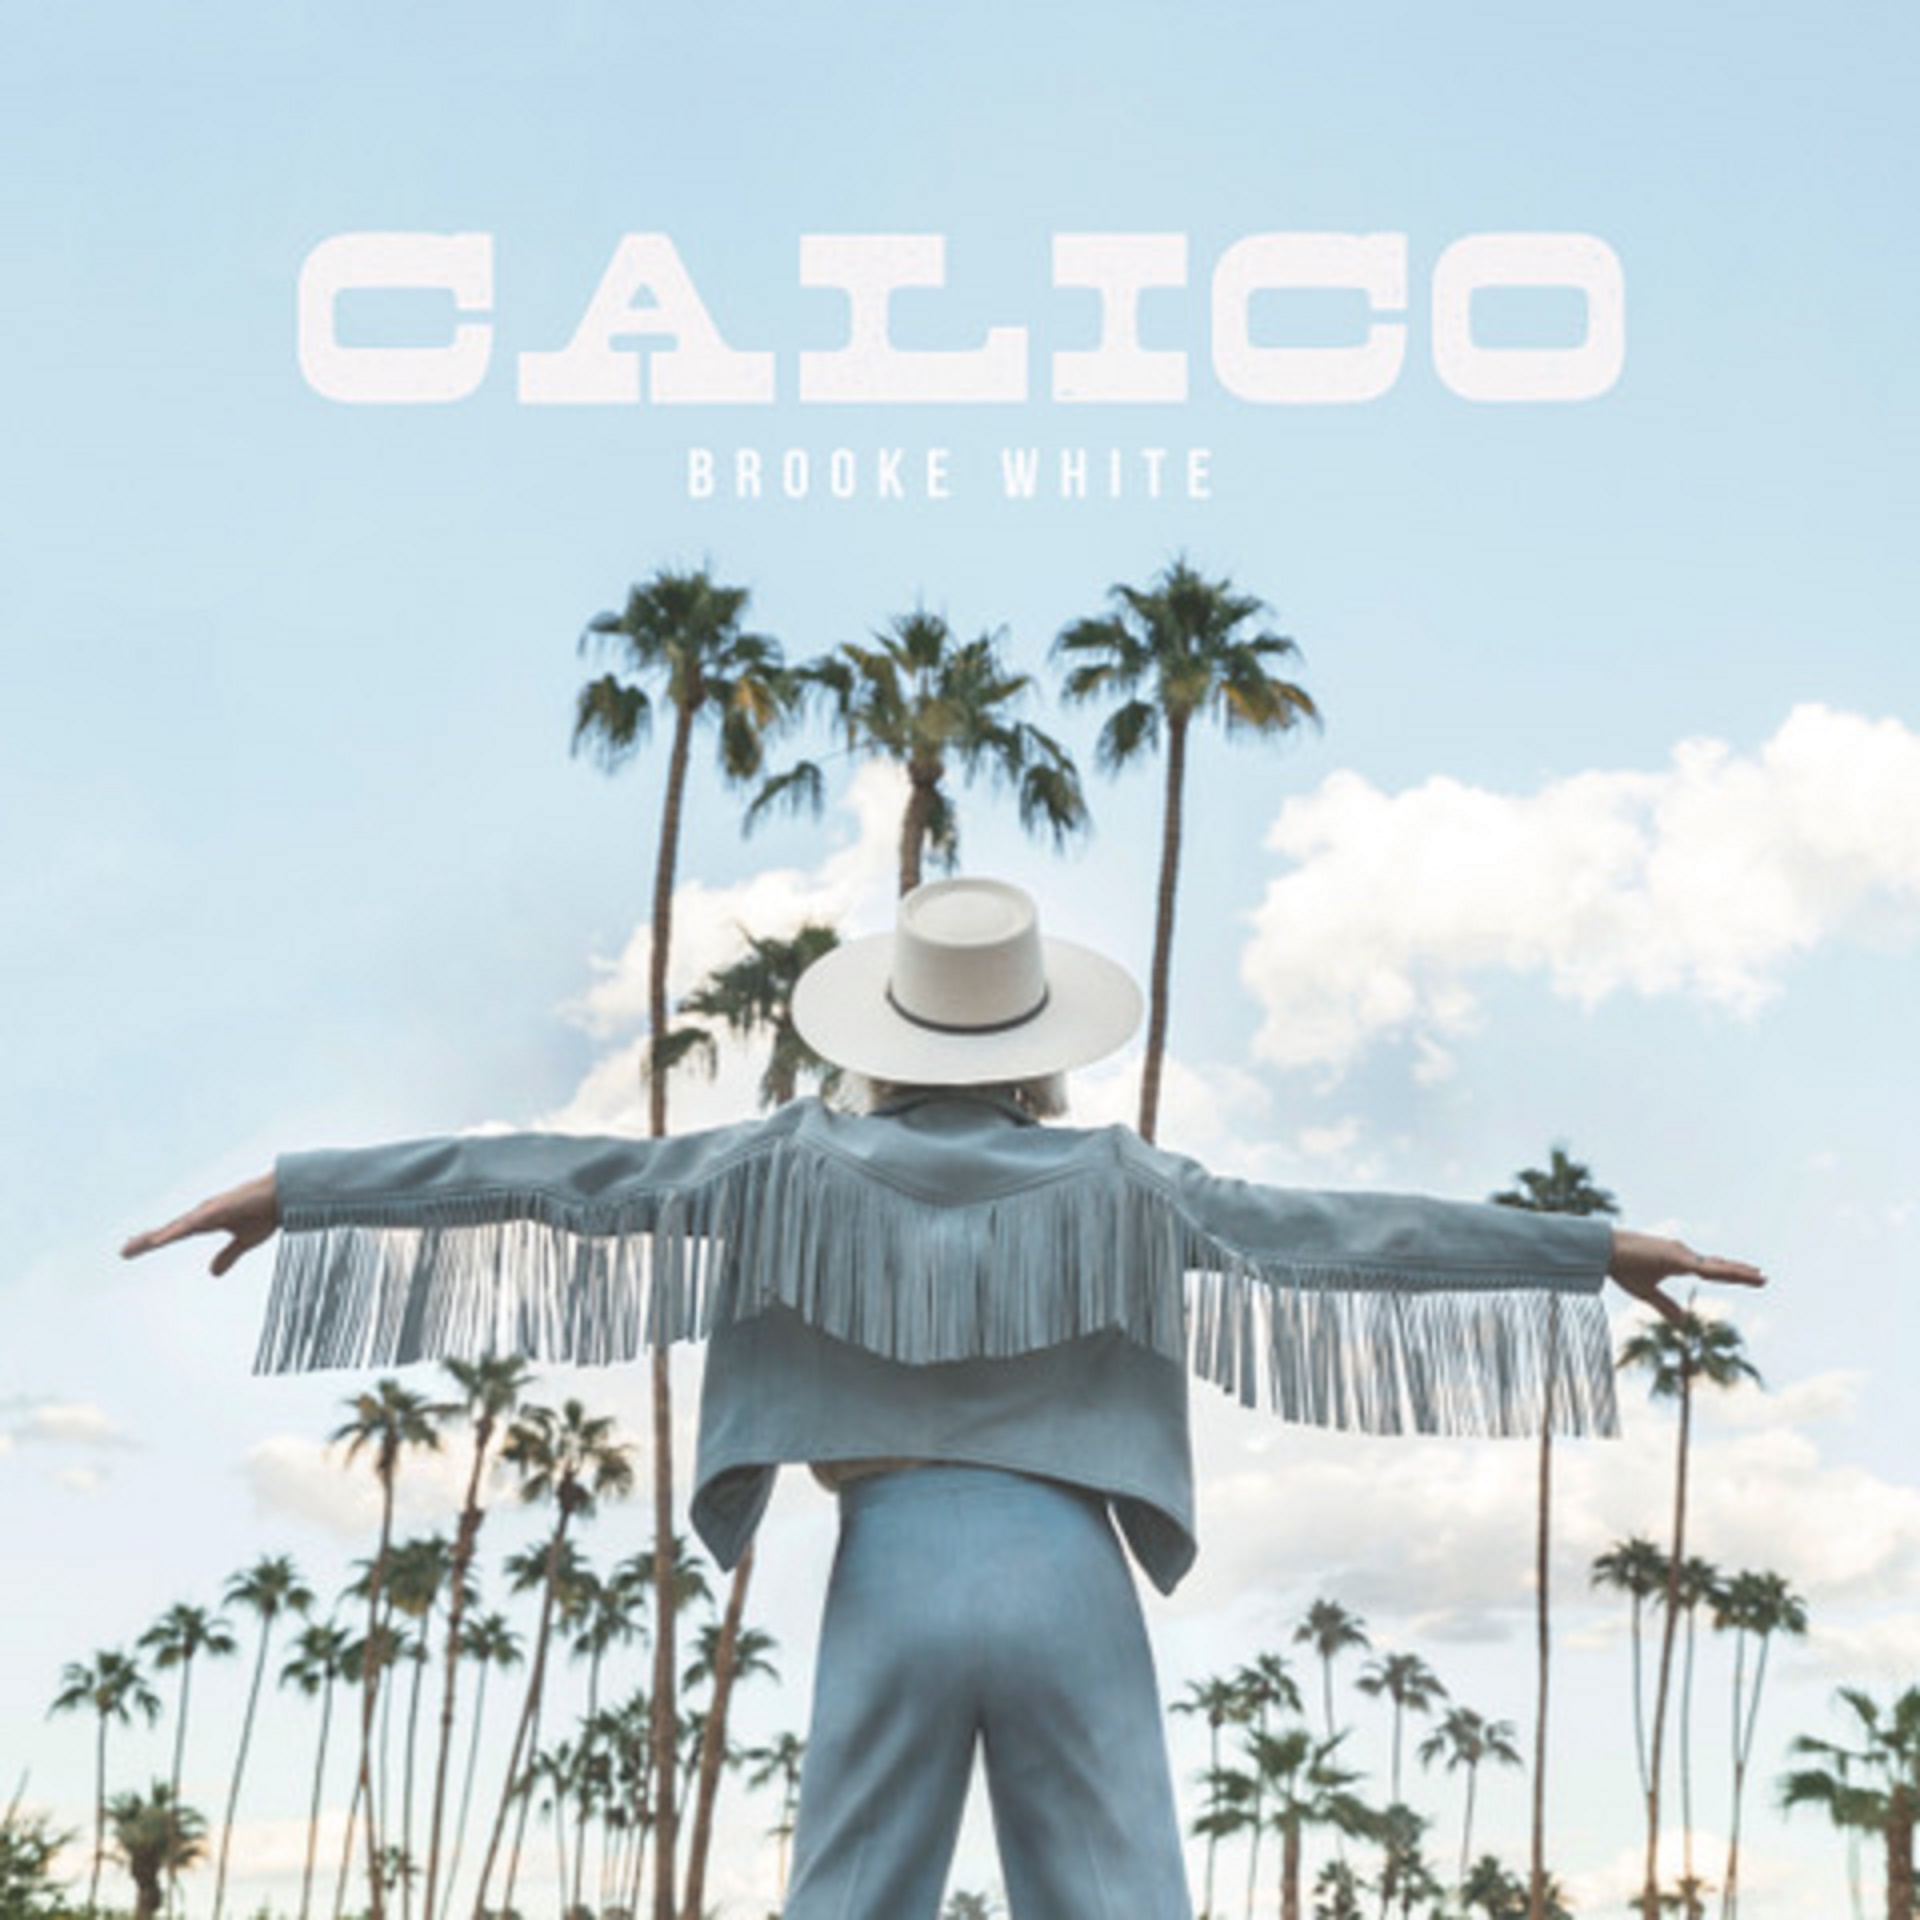 Brooke White Releases New Single "Calico"